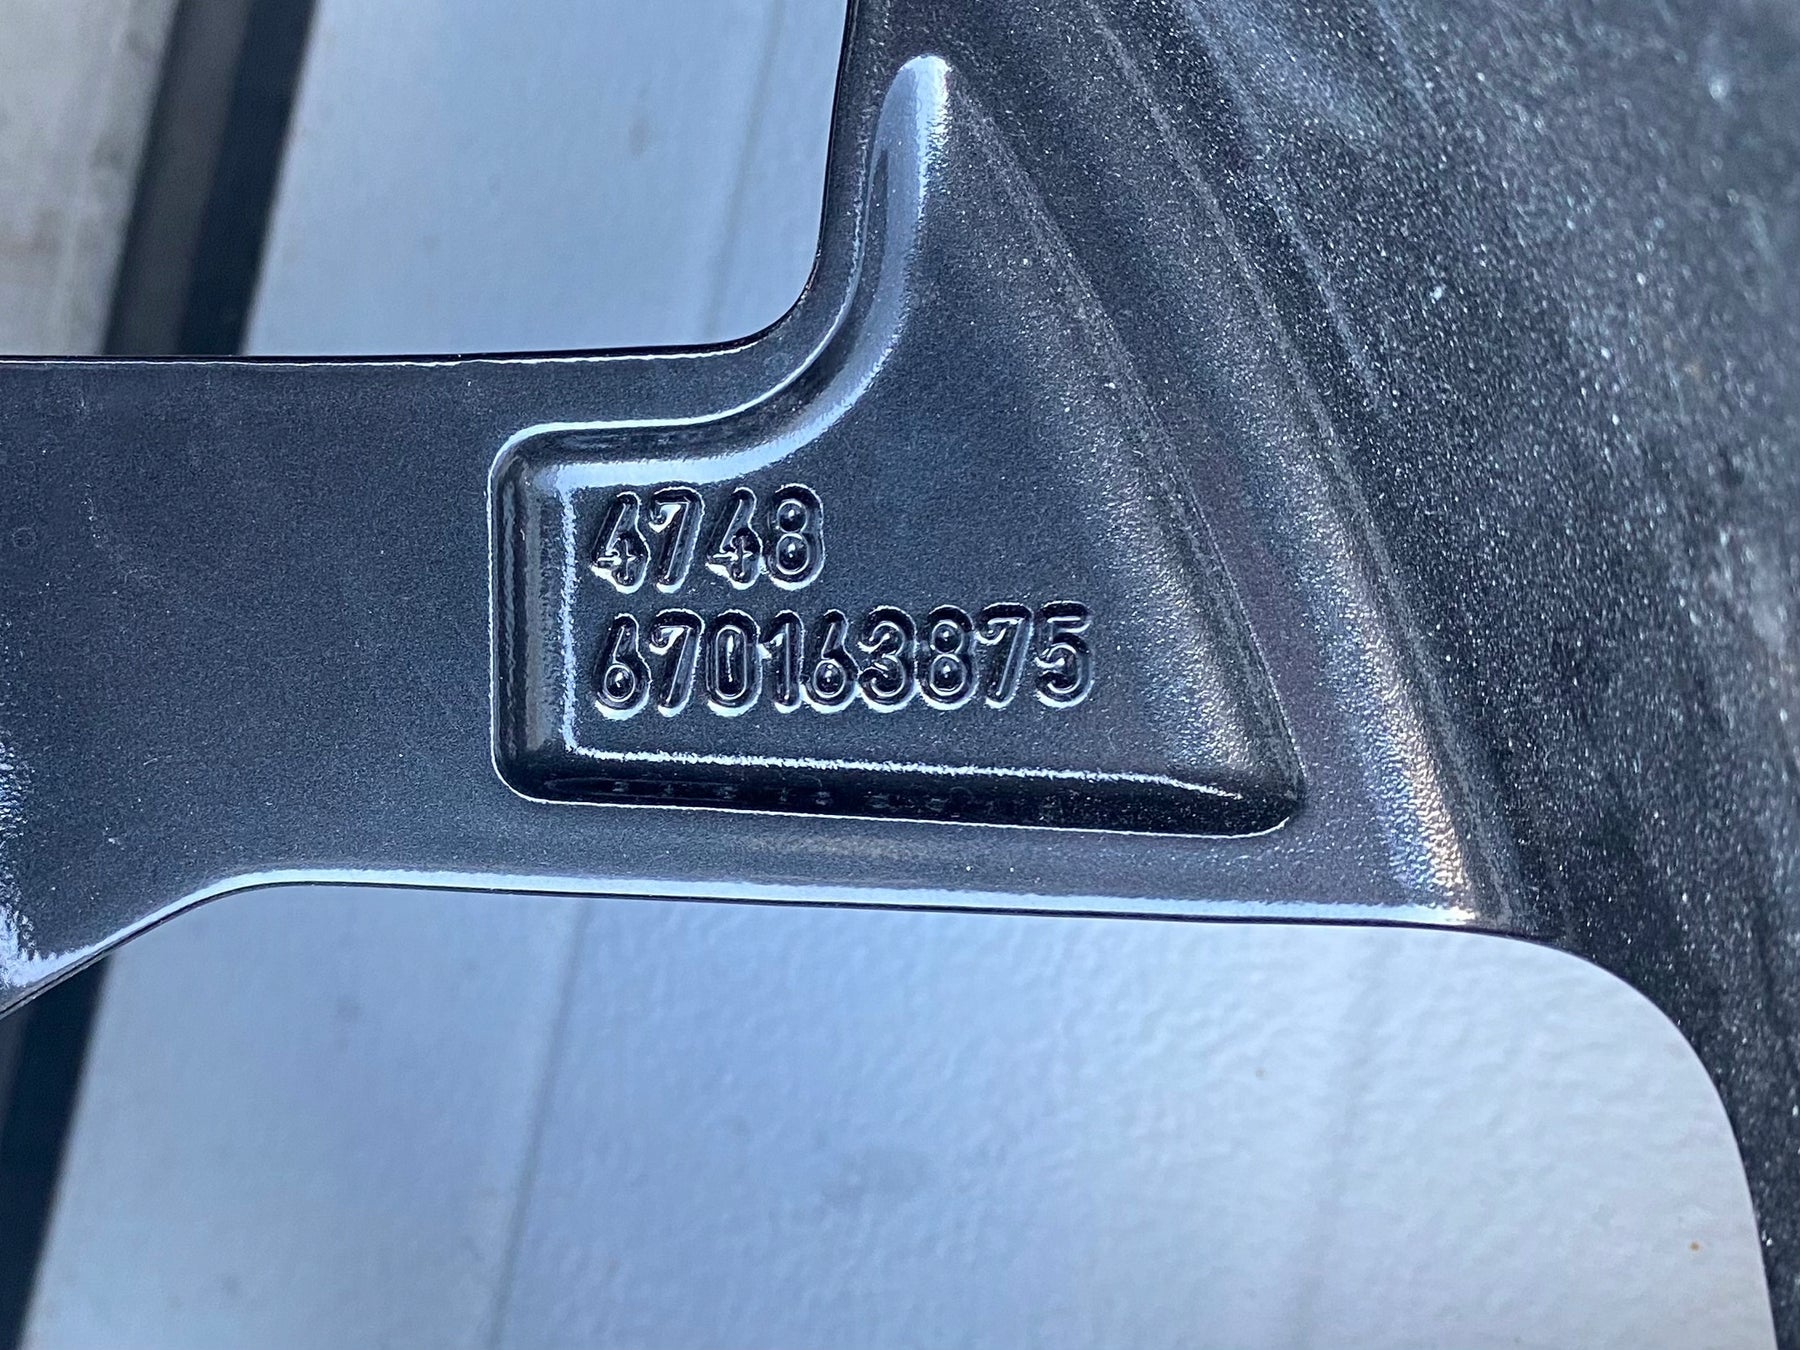 Maserati MC20 Black Wheel 20 inch set with tires, OEM, Part number: